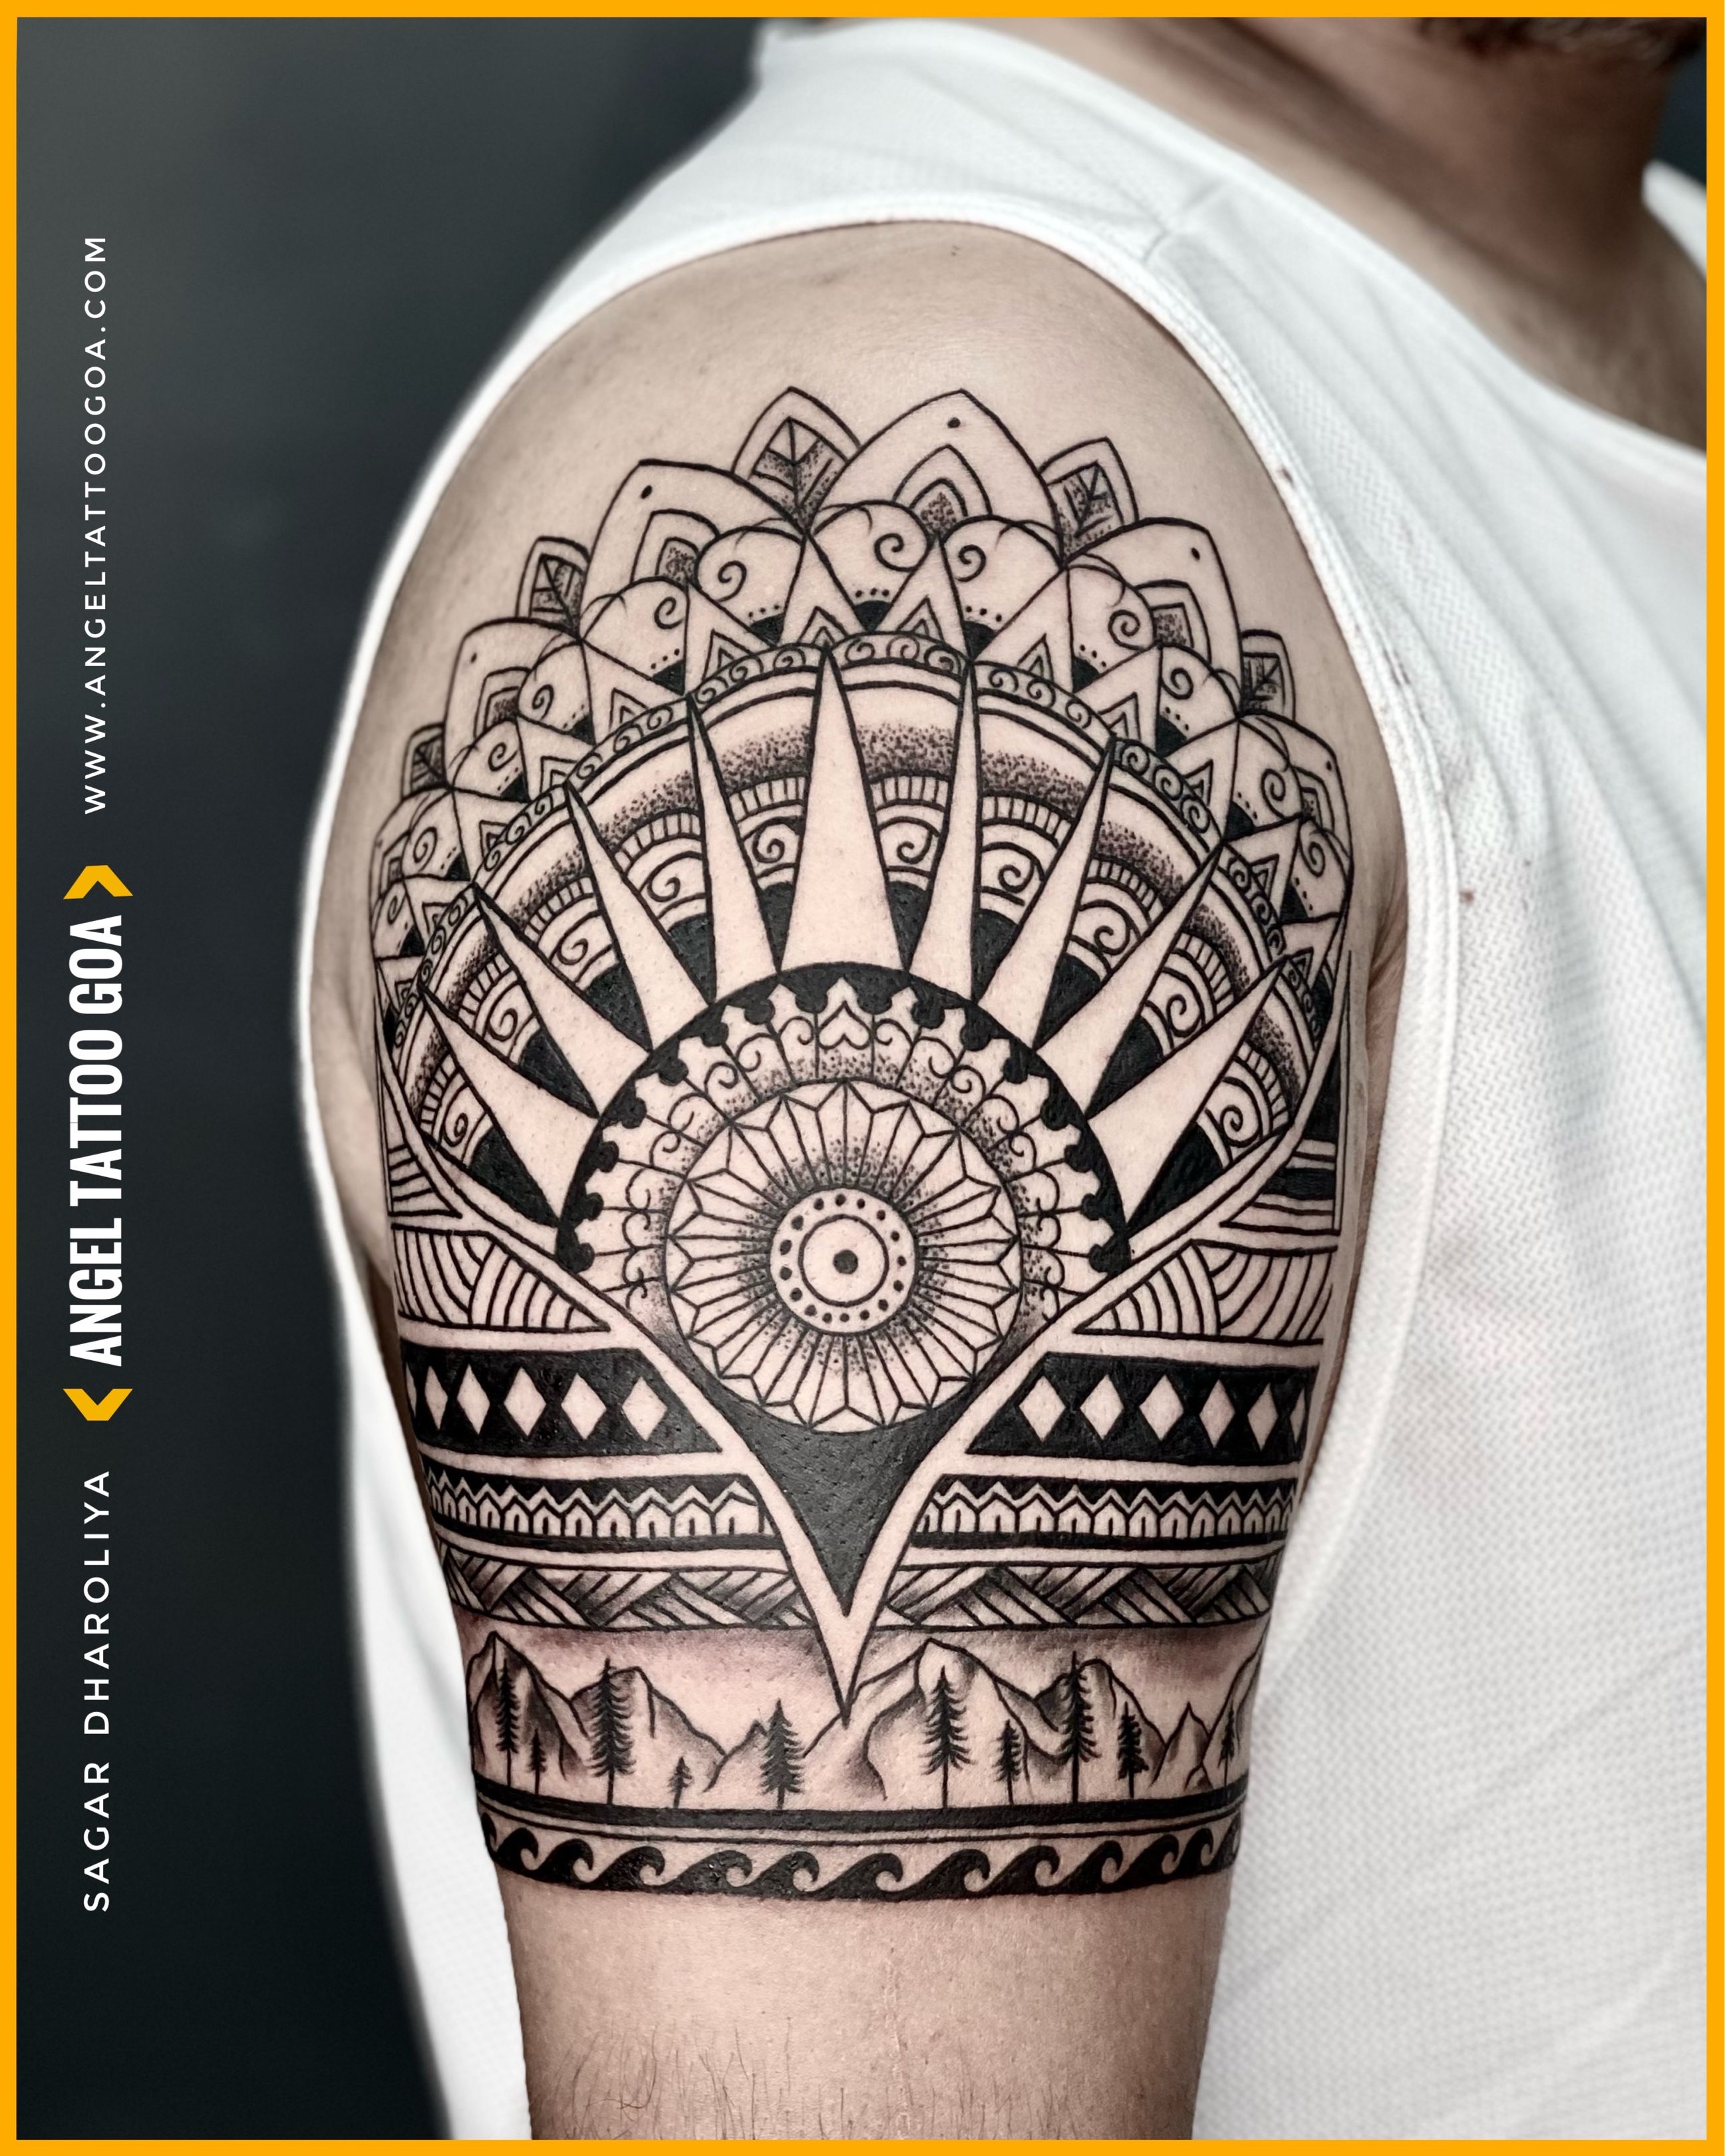 Ganesh tattoo goa | Saligao